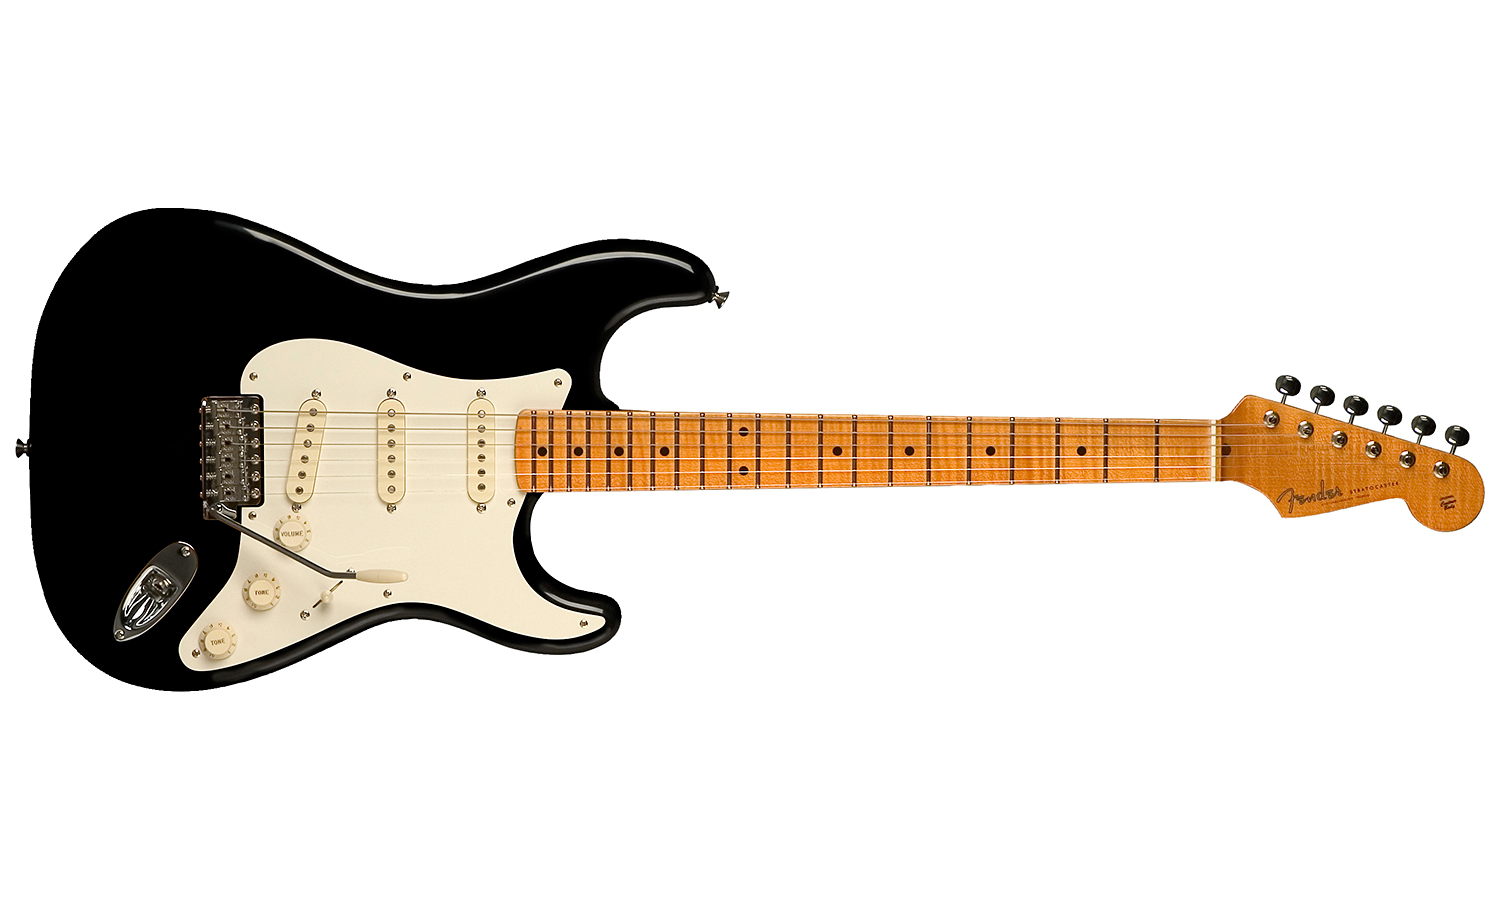 Fender Strat Eric Johnson Usa Signature Sss Mn - Black - Str shape electric guitar - Variation 1